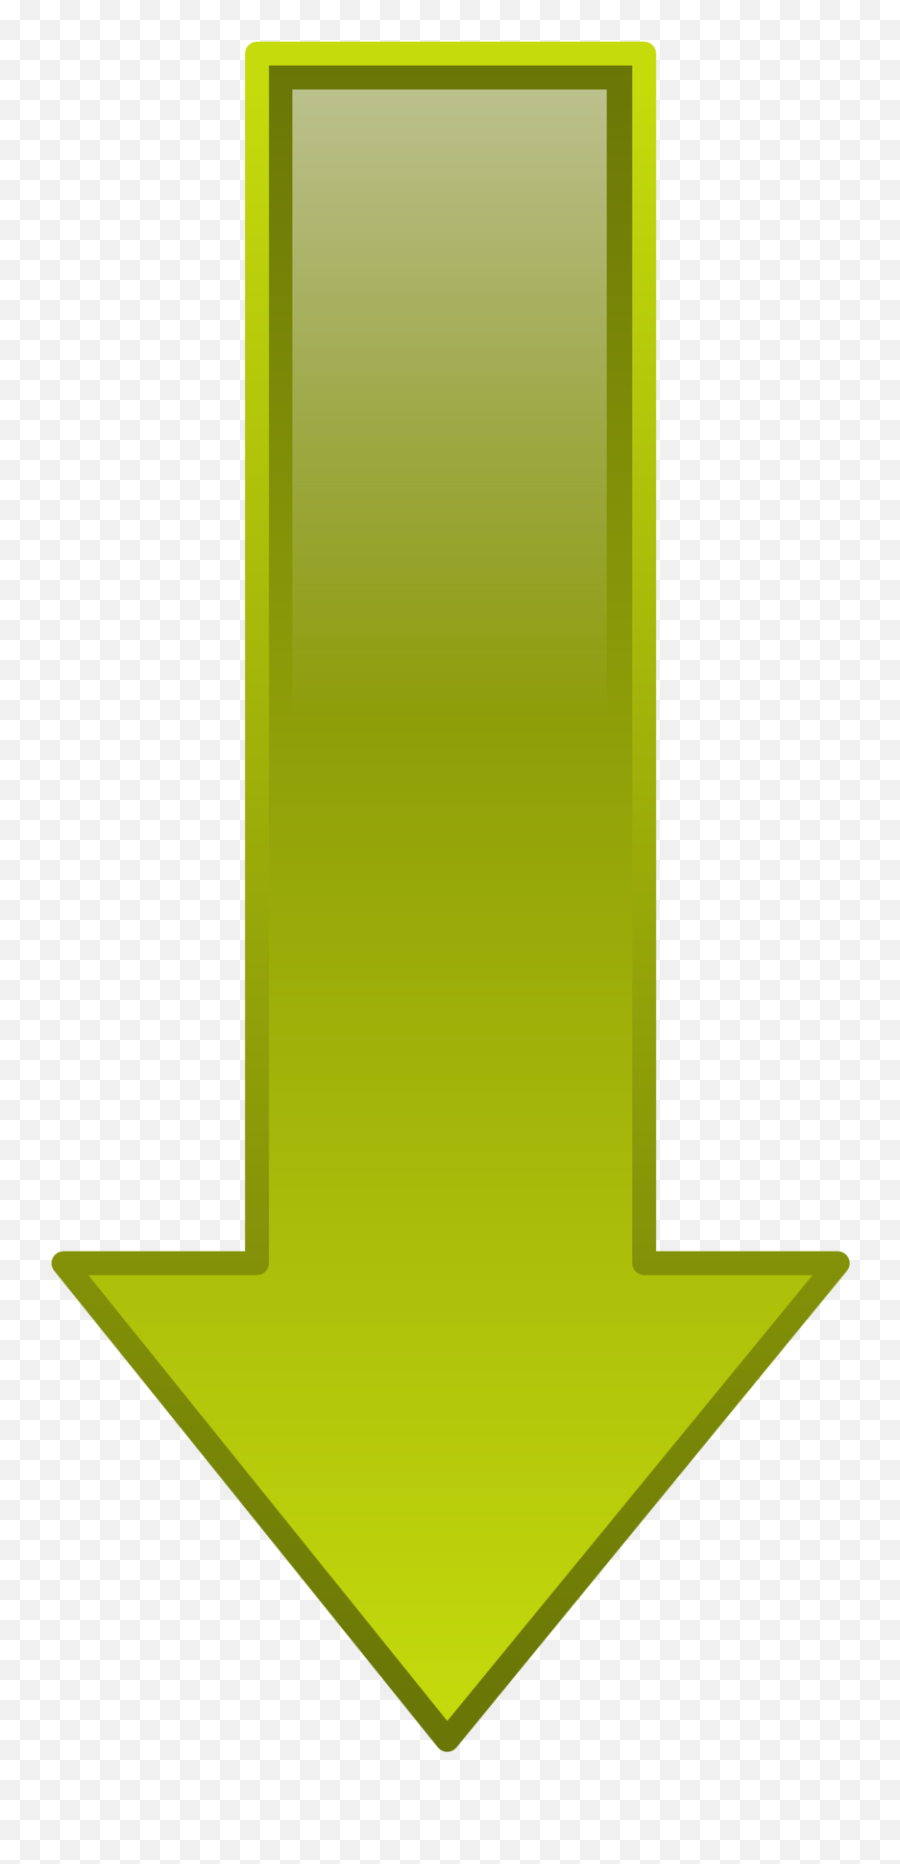 Free Arrow Clipart No Background - Clipart Best Clipart Best Down Arrow On Transparent Background Emoji,Arrow Clipart